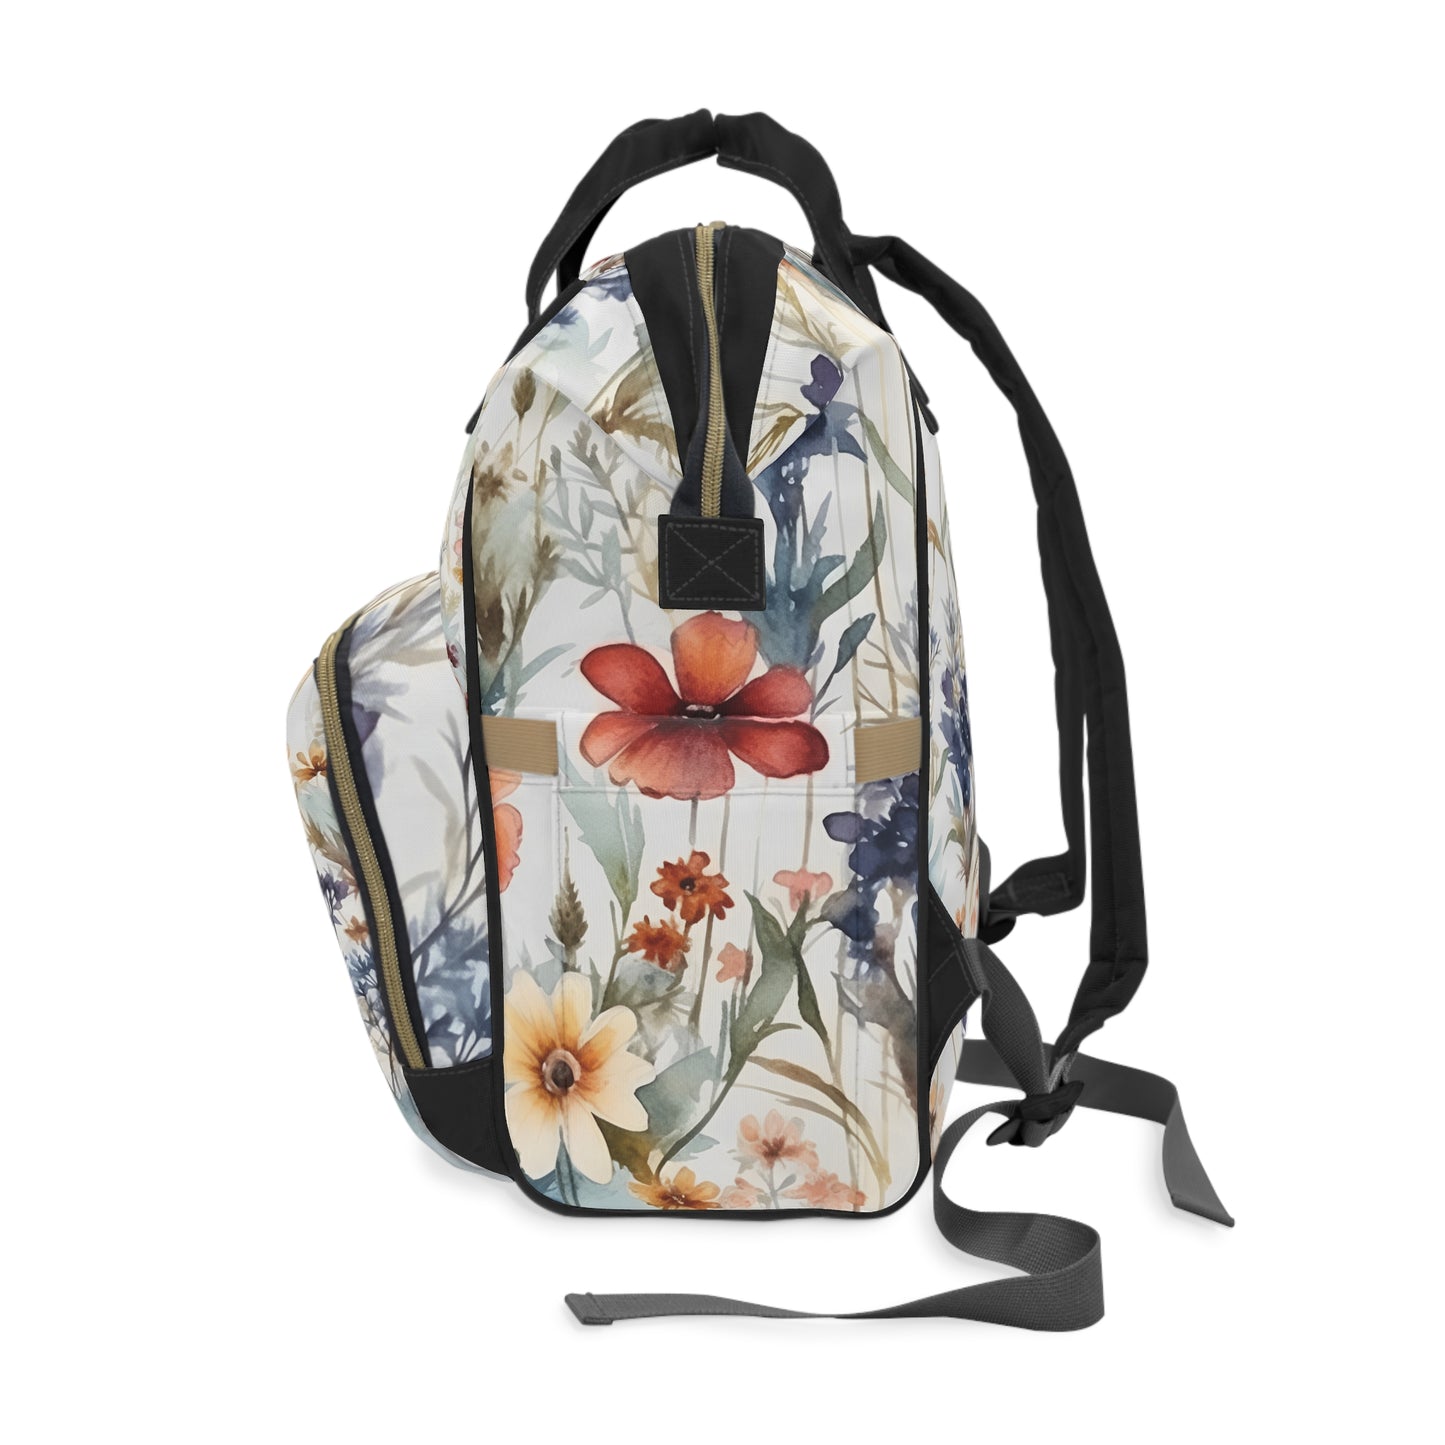 Ethereal Bloom Multifunctional Diaper Backpack